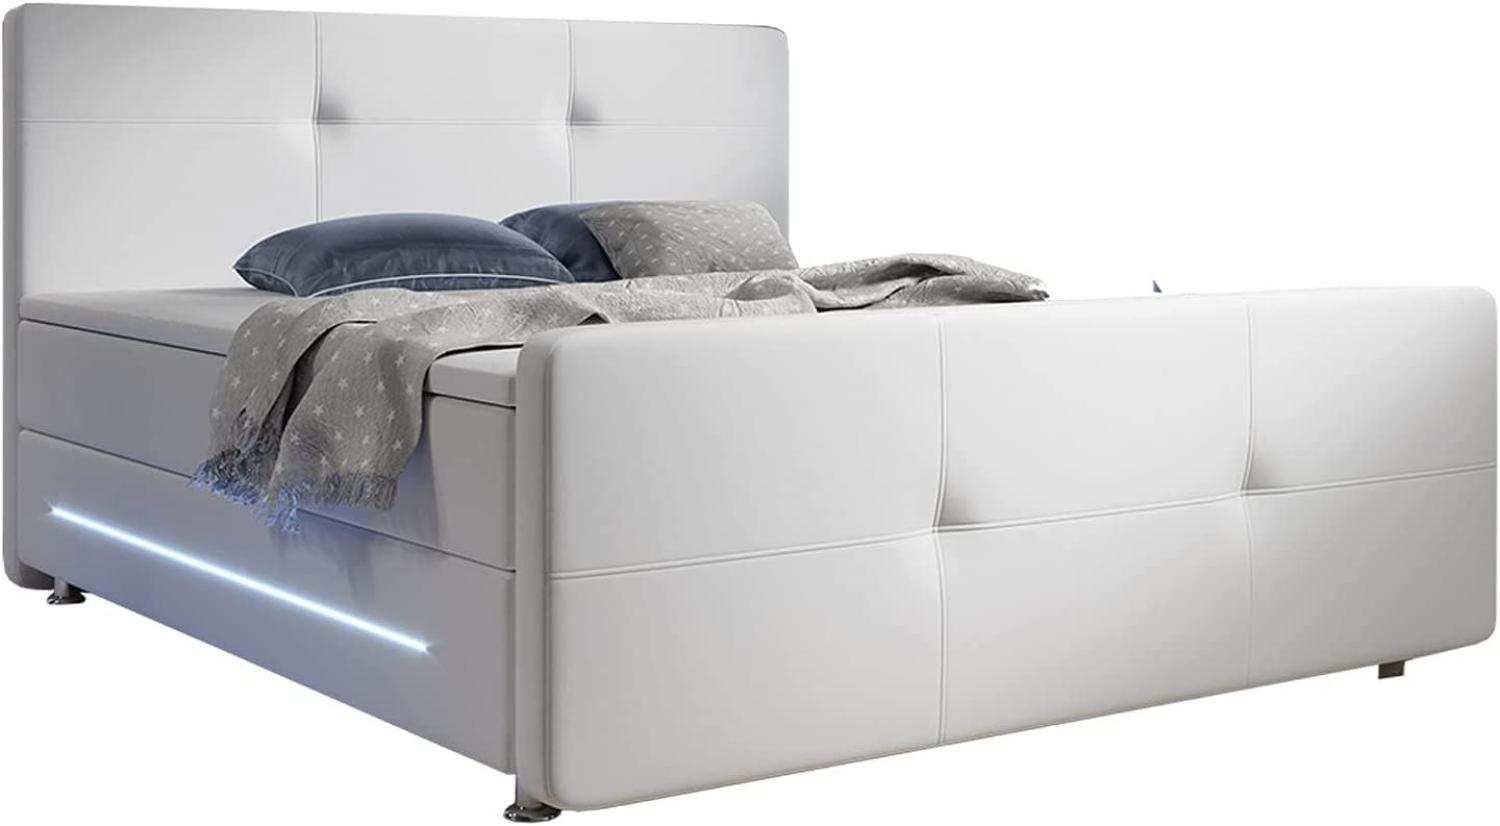 Juskys Boxspringbett Oakland 180 x 200 cm – LED Beleuchtung, Bonell-Matratzen, Topper & Kunstleder – 58 cm Komforthöhe – weiß – Bett Doppelbett Bild 1